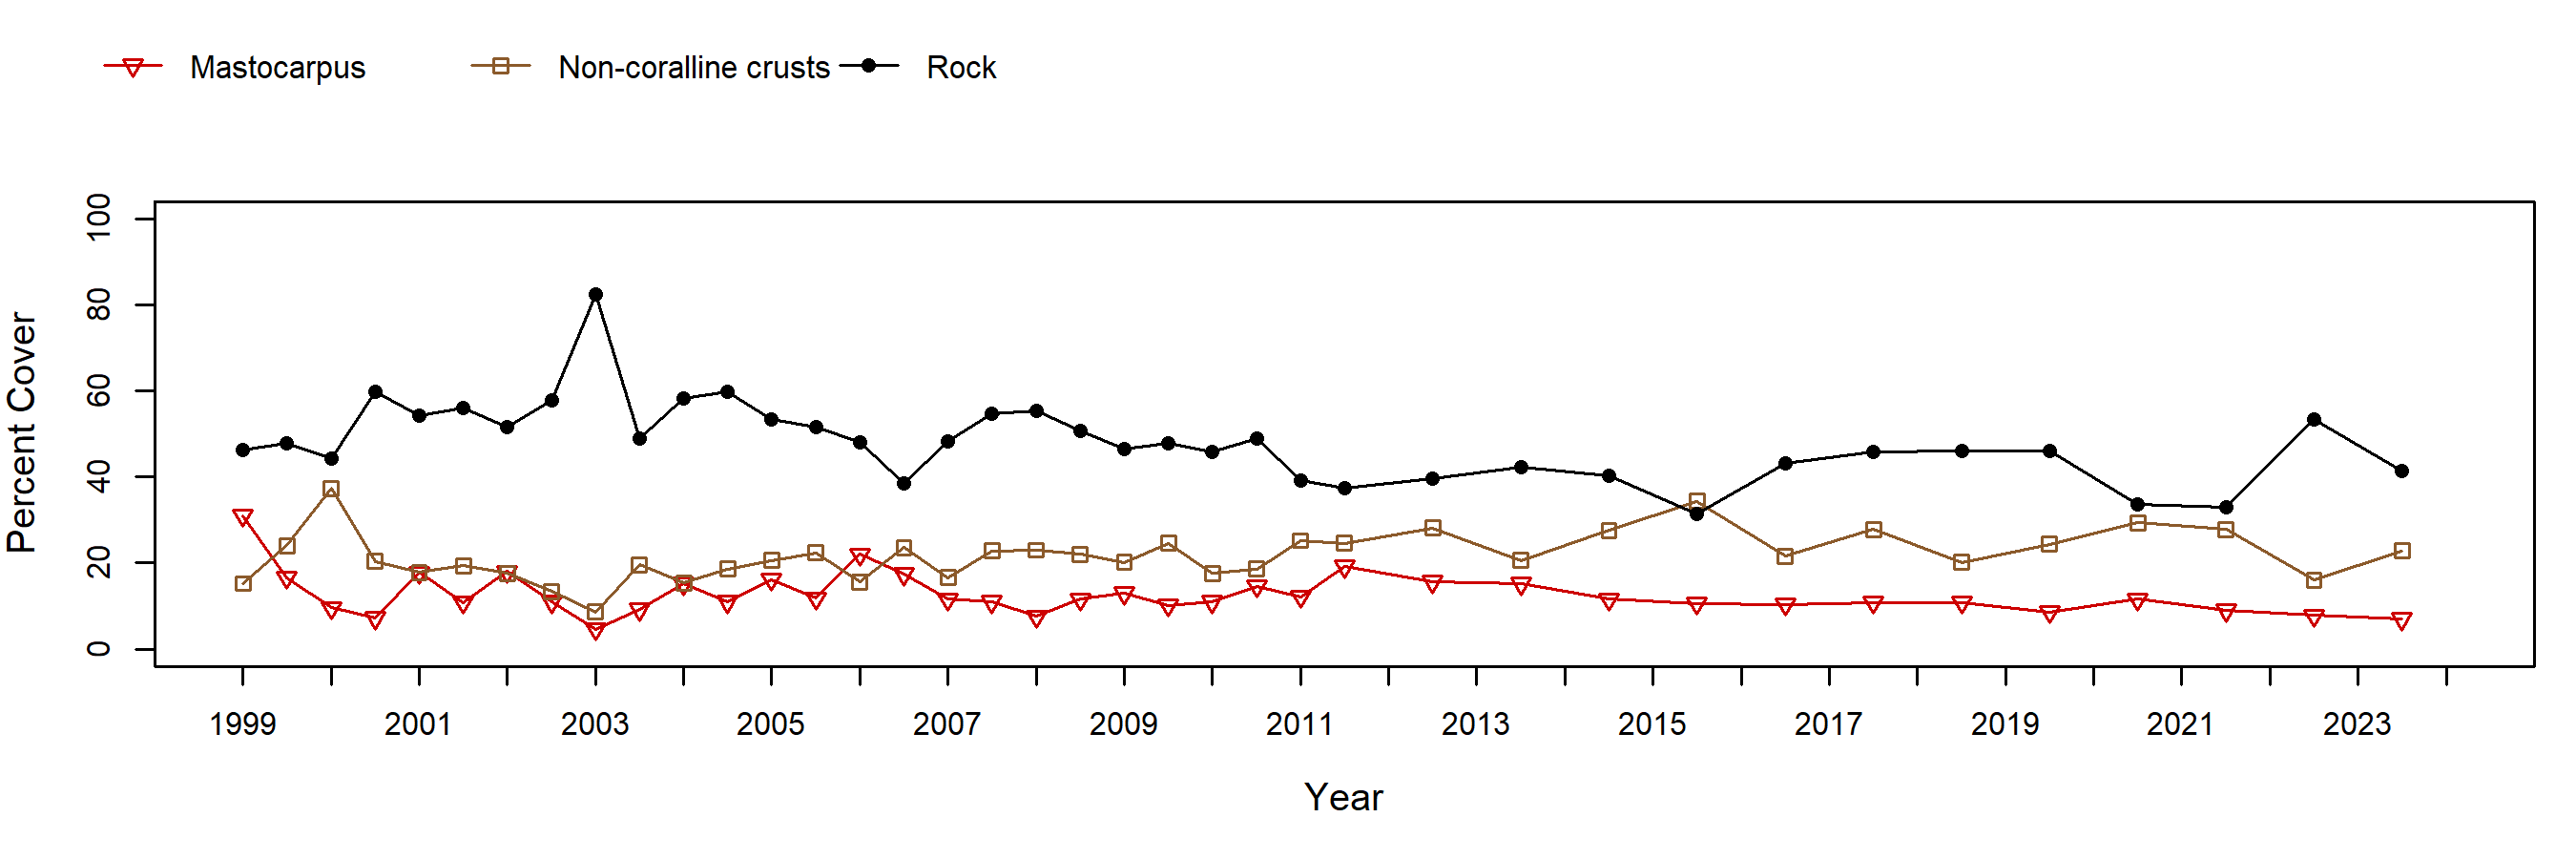 Terrace Point Mastocarpus trend plot